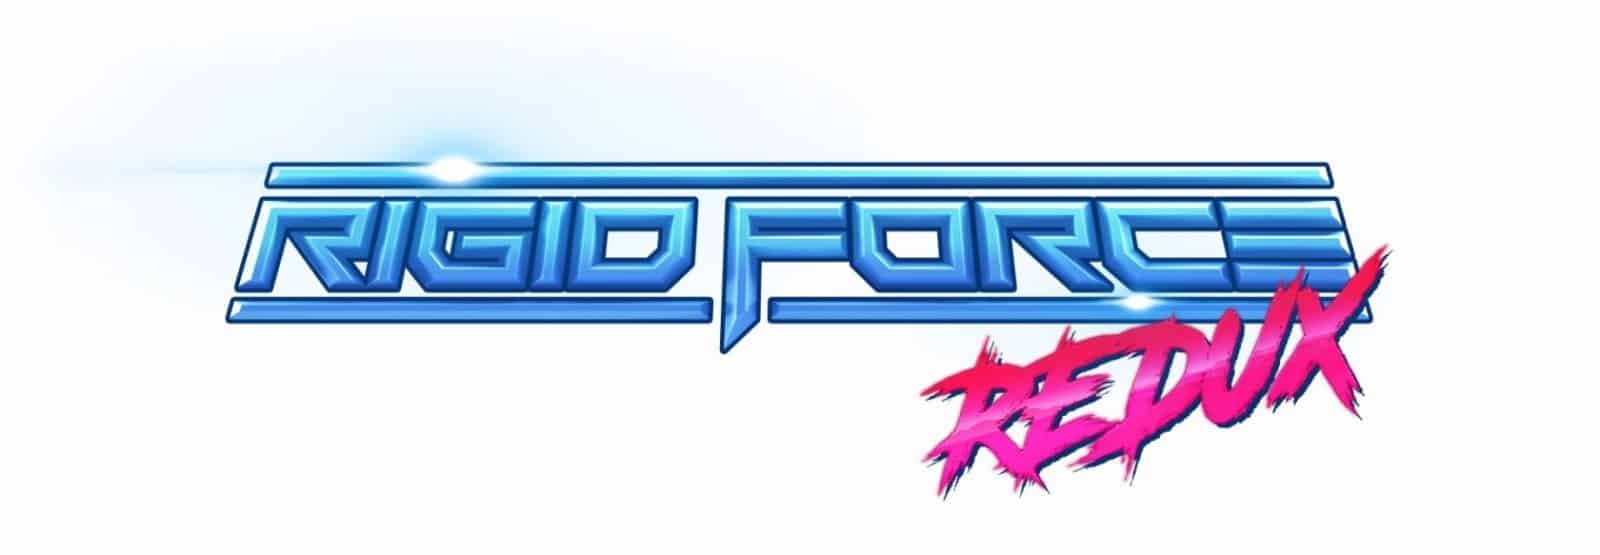 Rigid Force Redux Logo